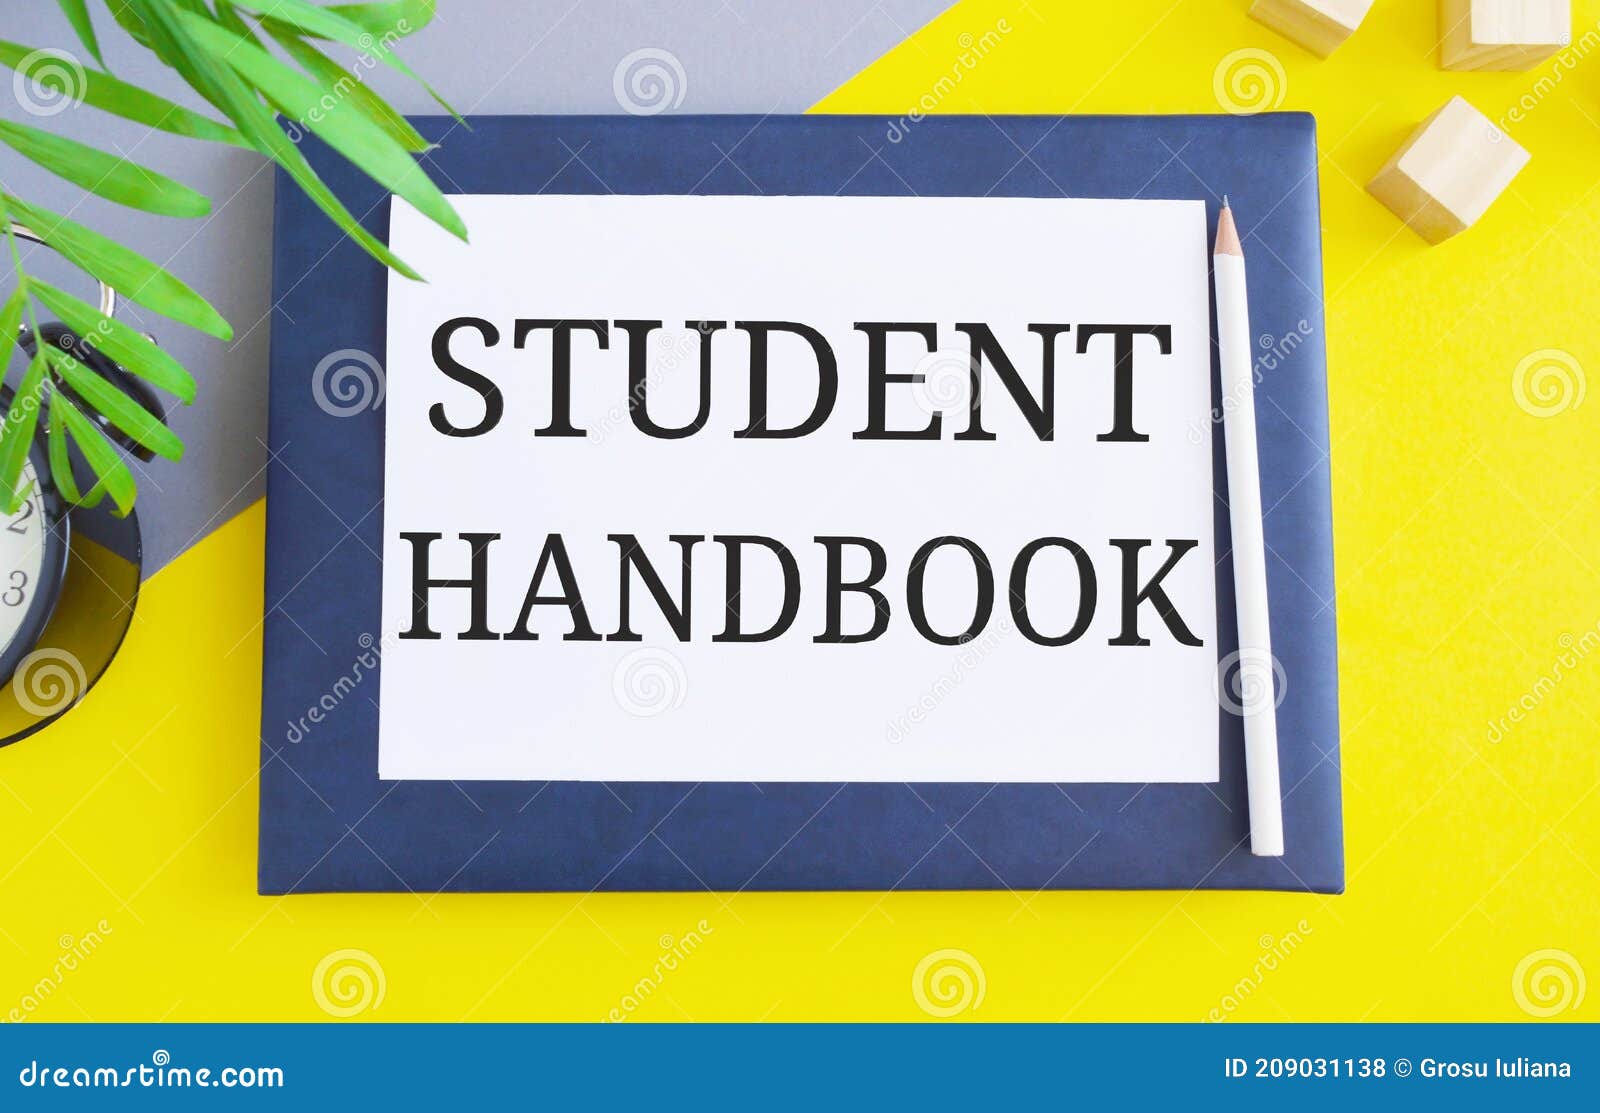 Image result for Student Handbook logo